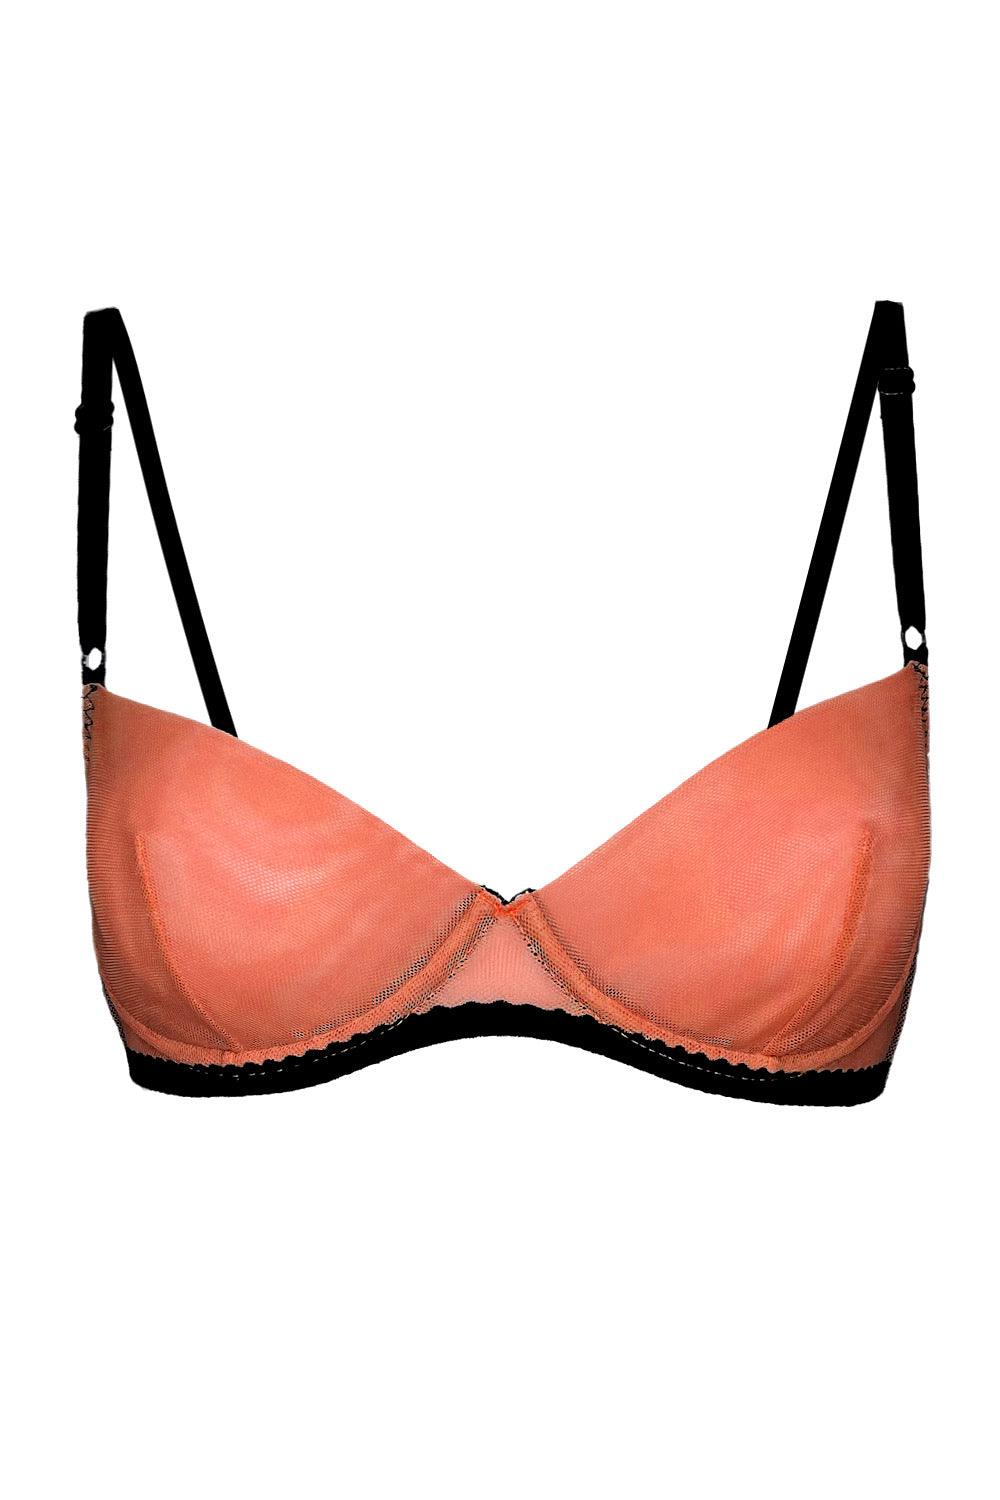 Marshmallow orange black bra - yesUndress